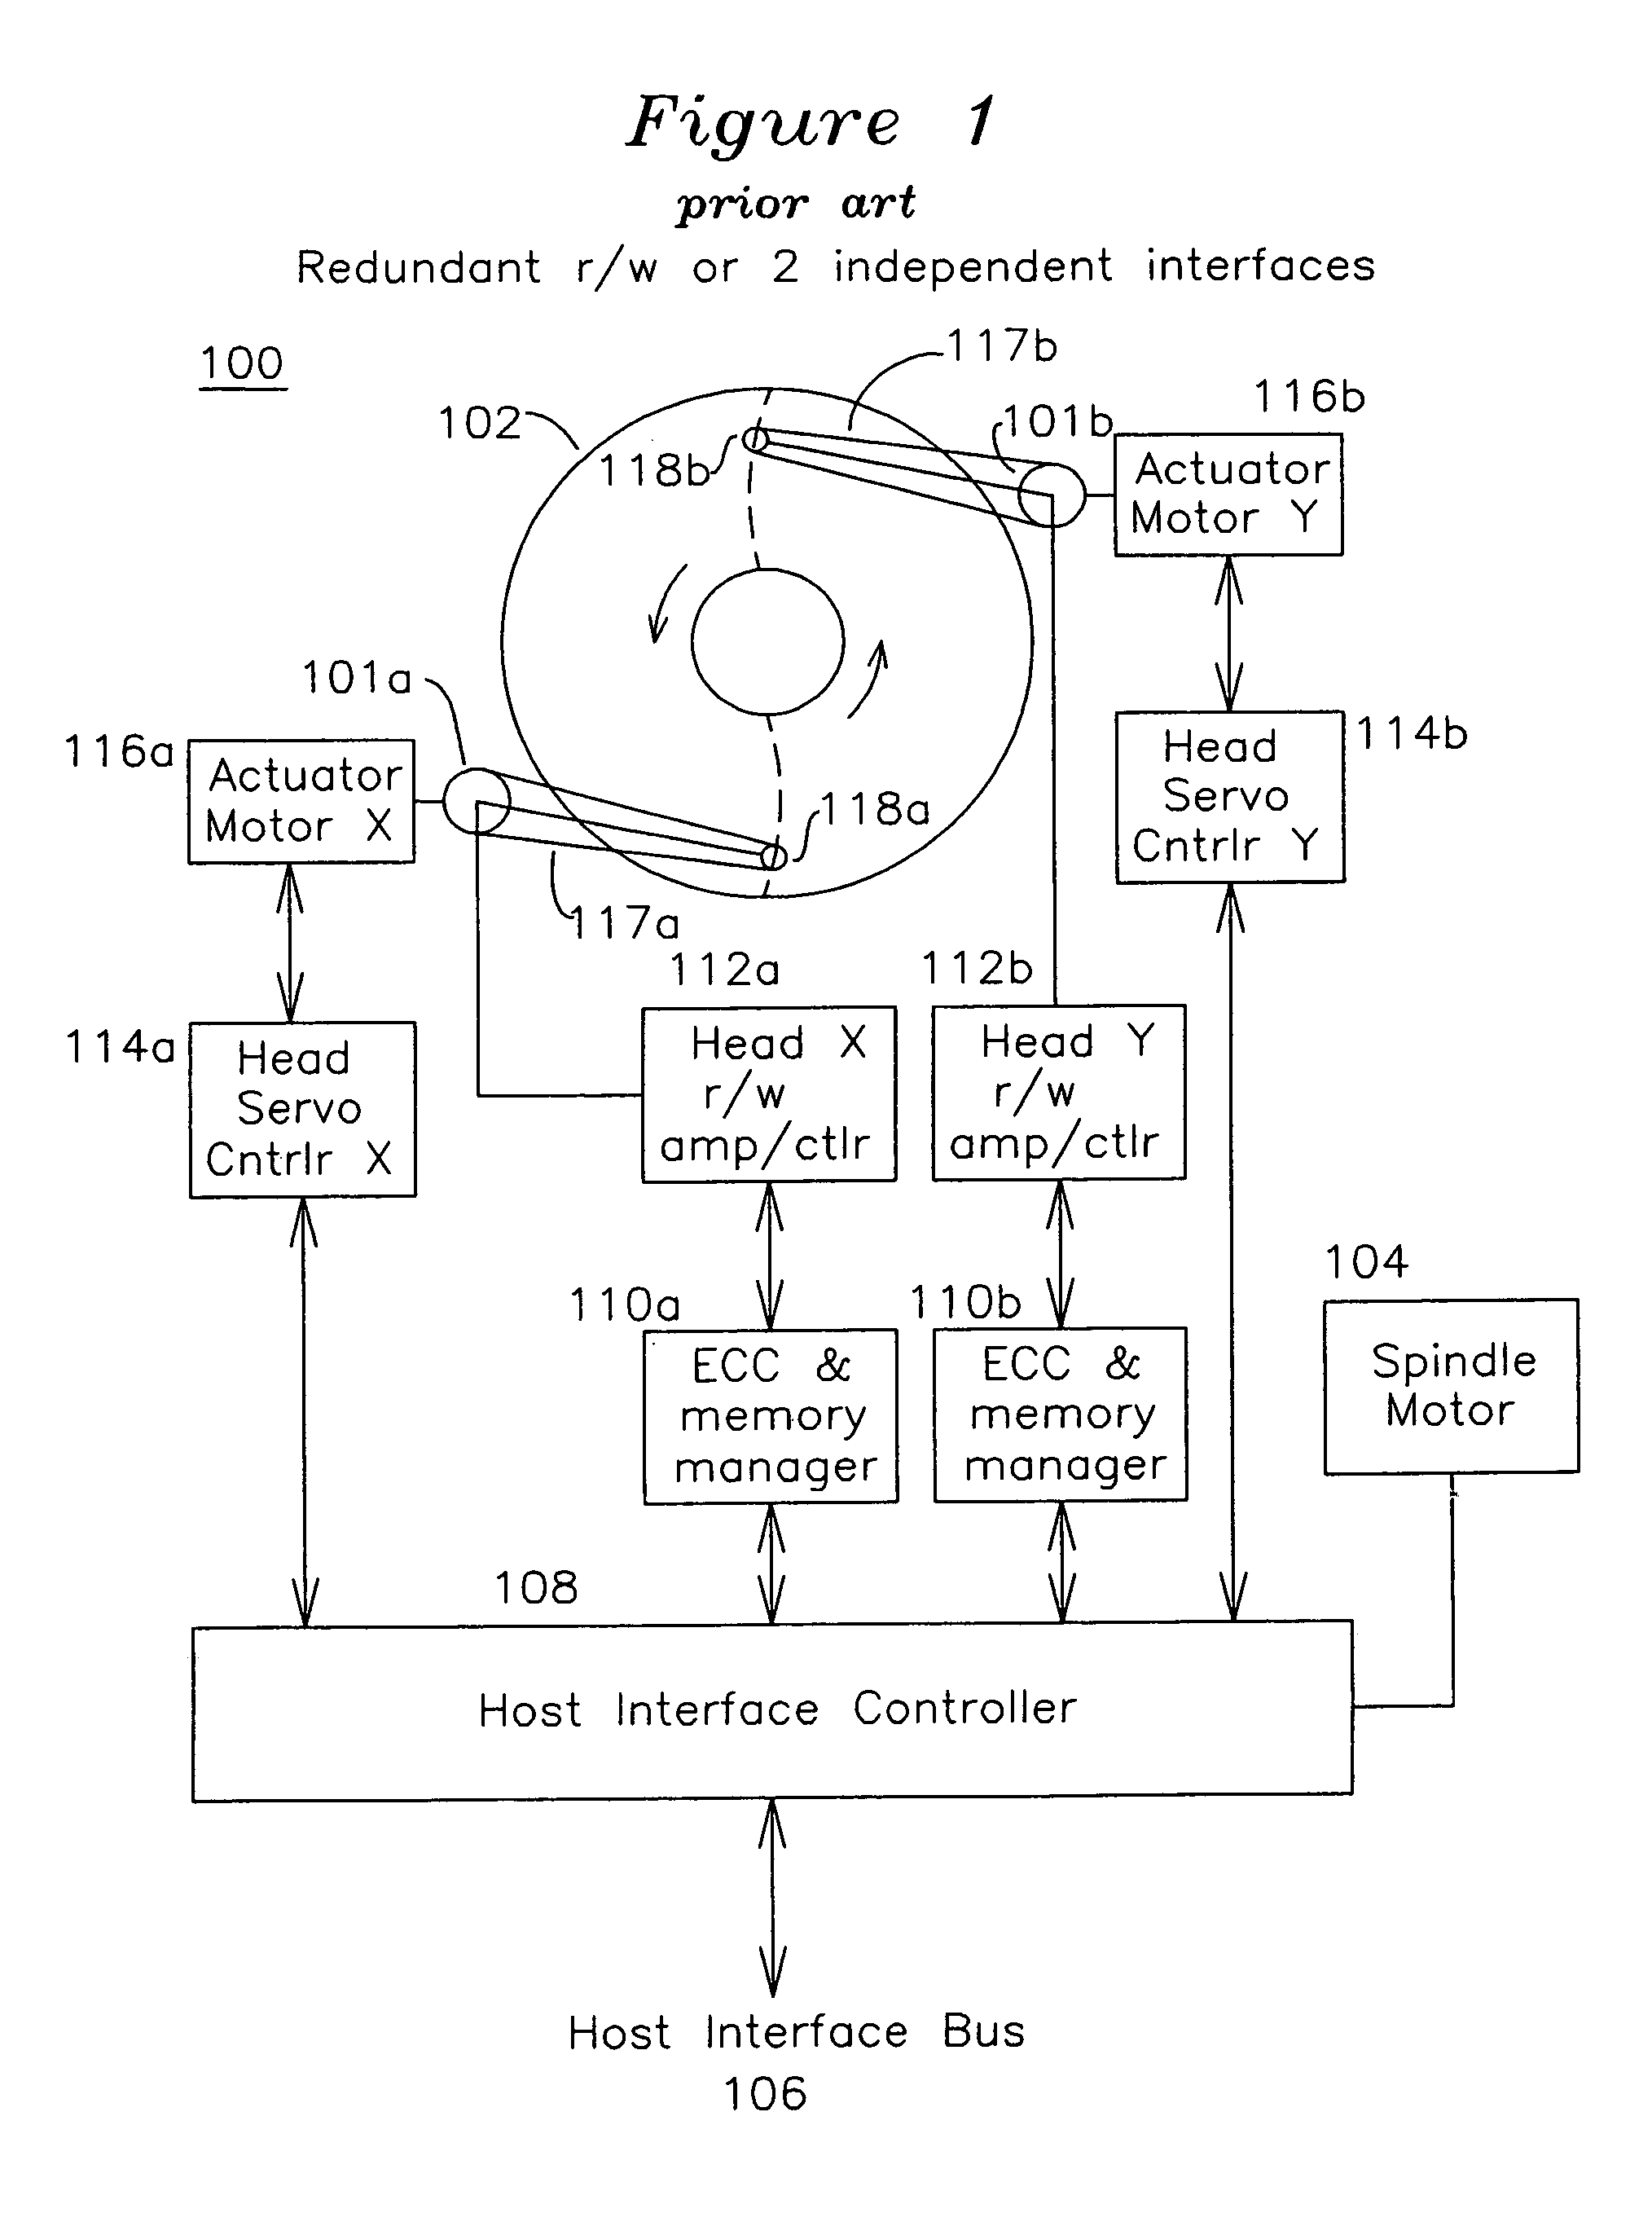 Disk data storage apparatus and method using multiple head actuators